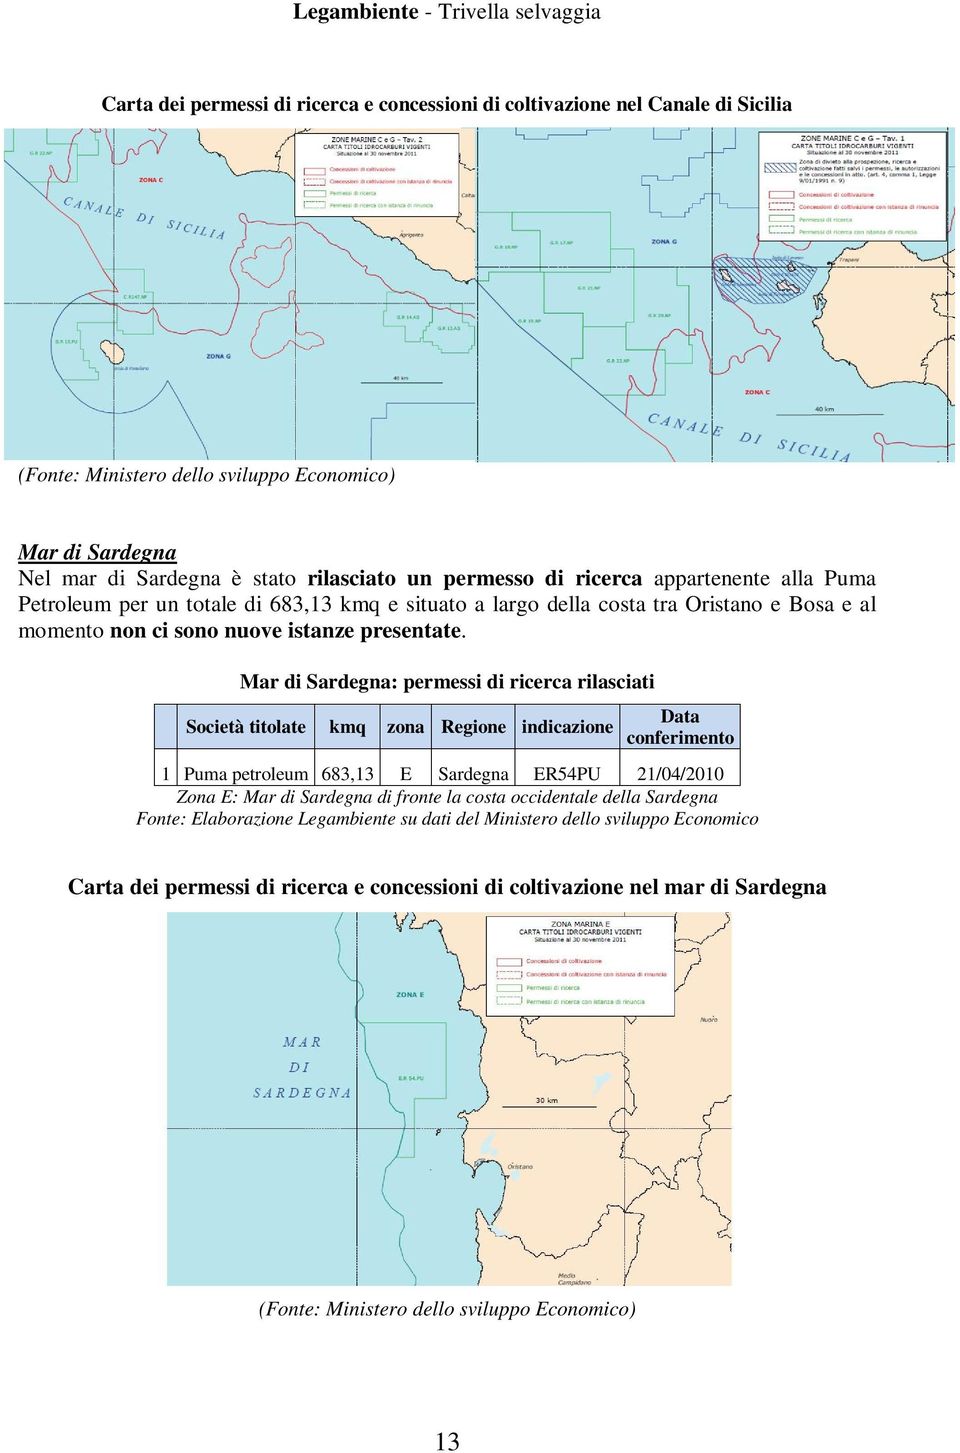 Mar di Sardegna: permessi di ricerca rilasciati Società titolate kmq zona Regione indicazione Data conferimento 1 Puma petroleum 683,13 E Sardegna ER54PU 21/04/2010 Zona E: Mar di Sardegna di fronte